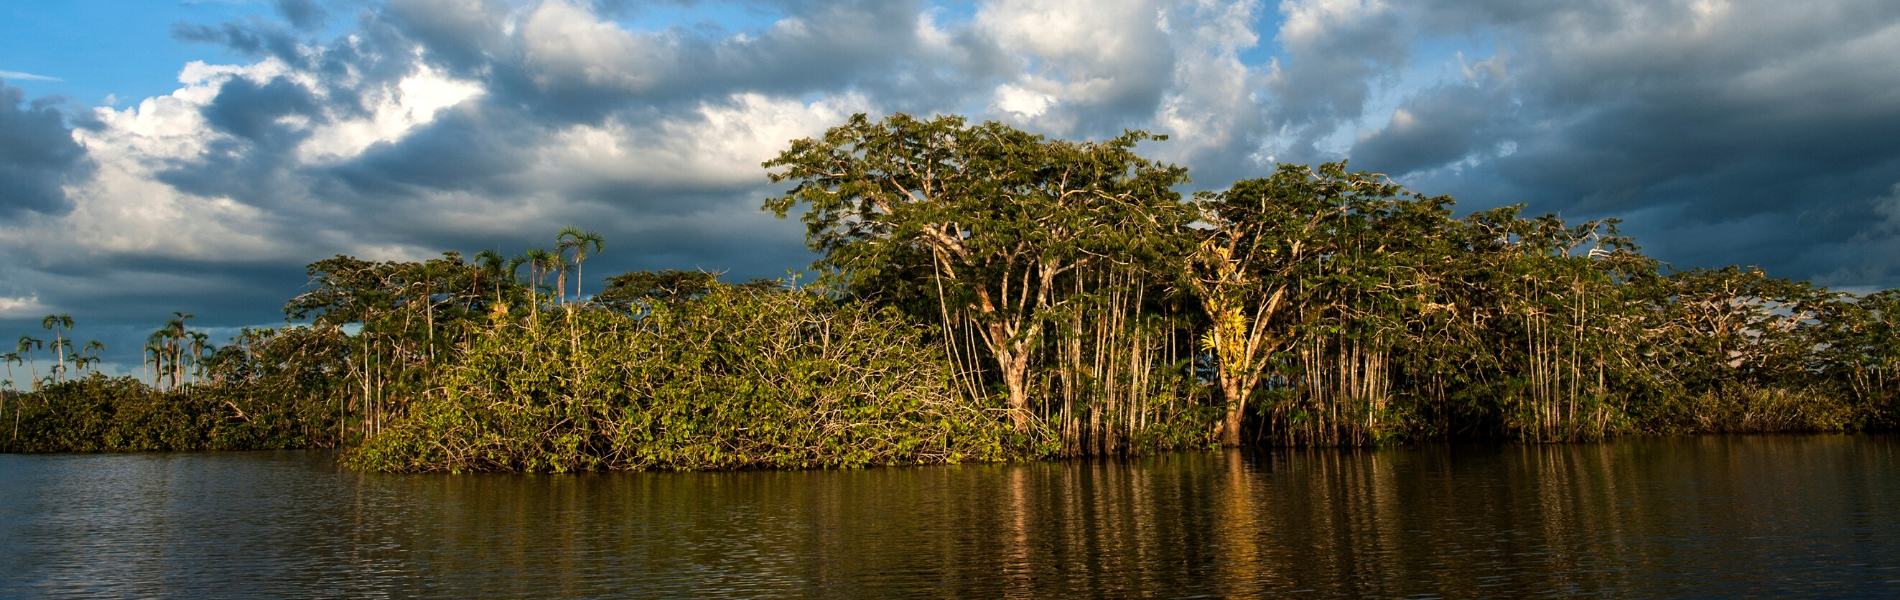 Cuyabeno Amazon Jungle Tour